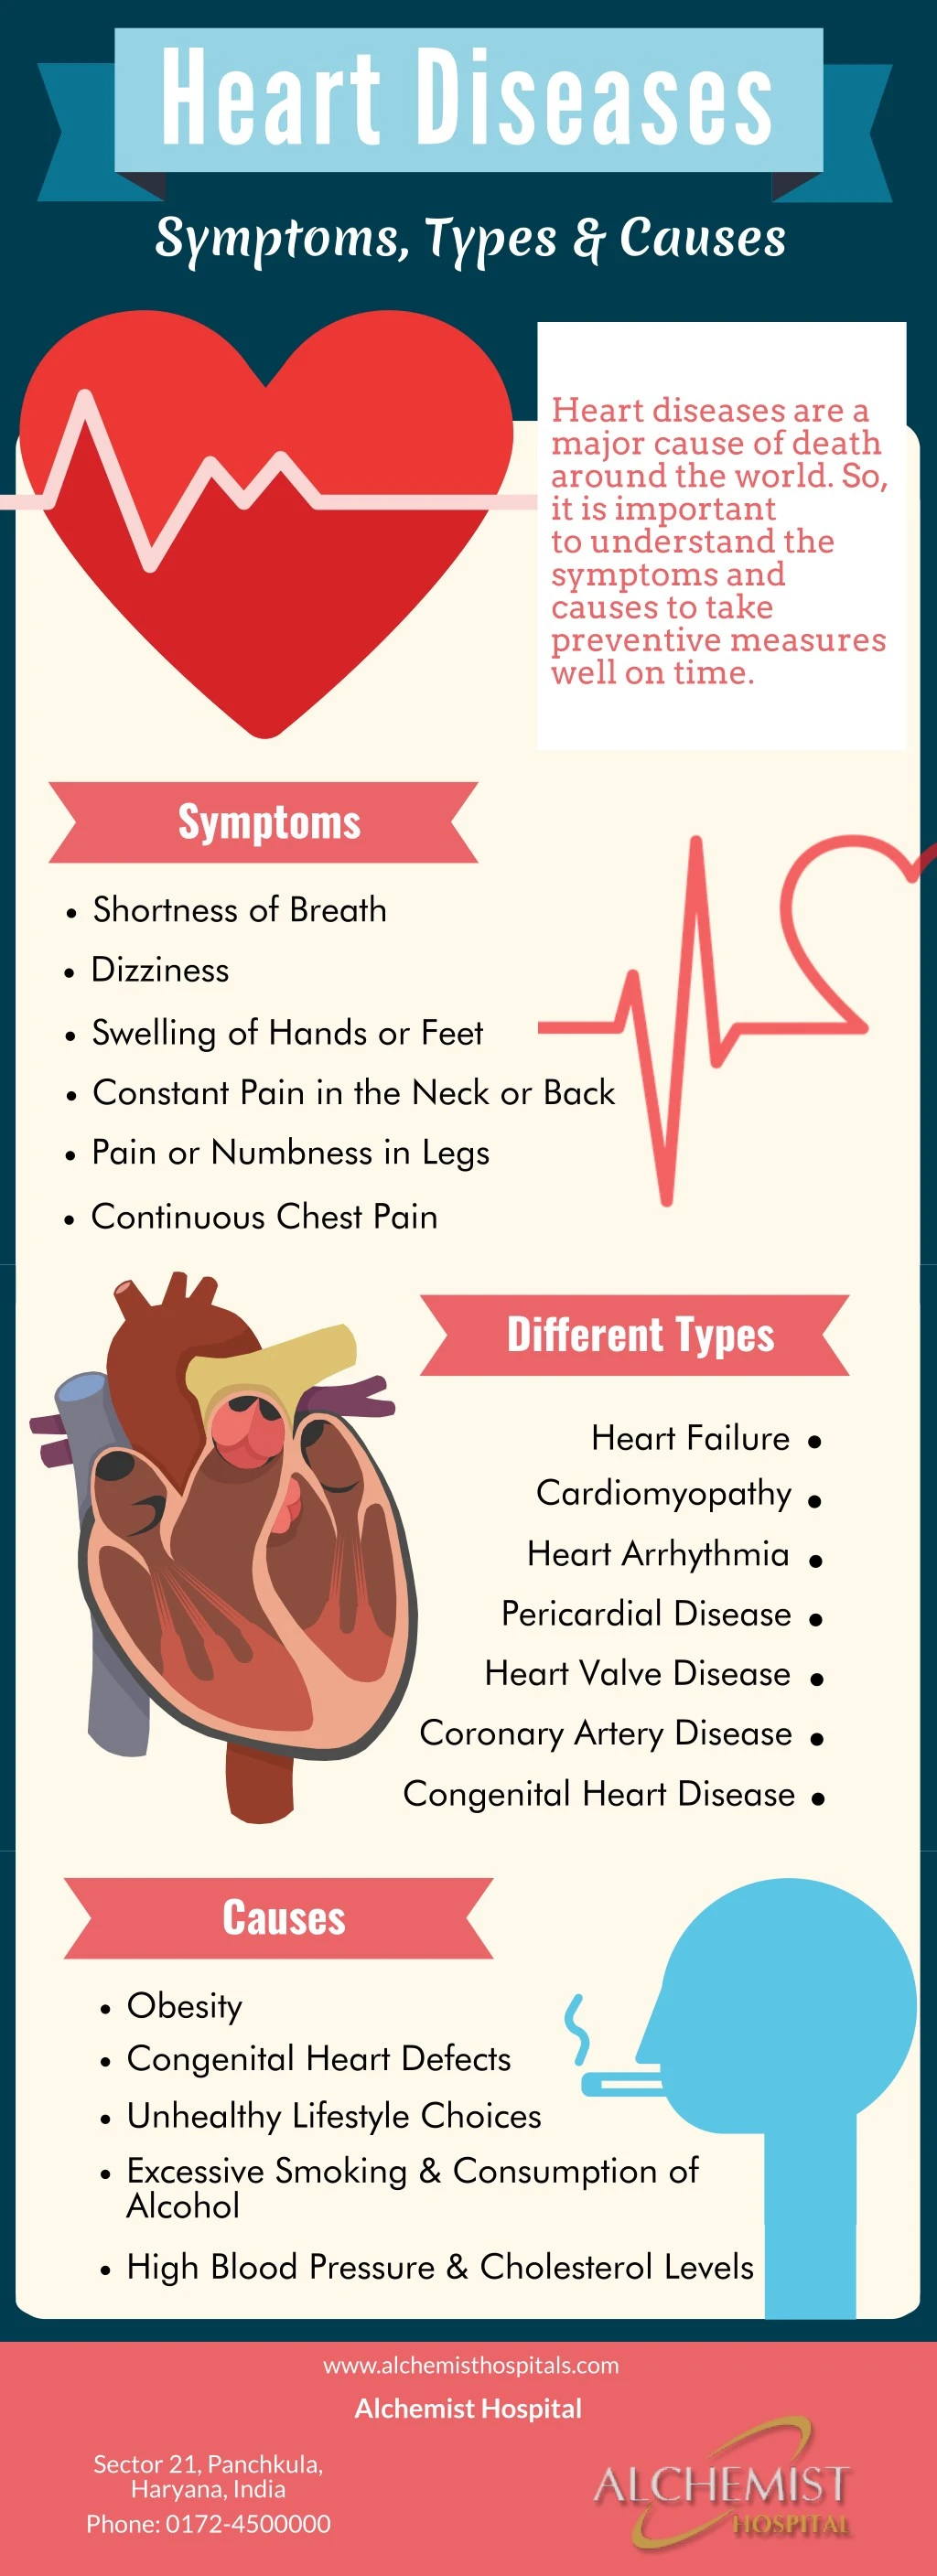 heart diseases symptoms types causes